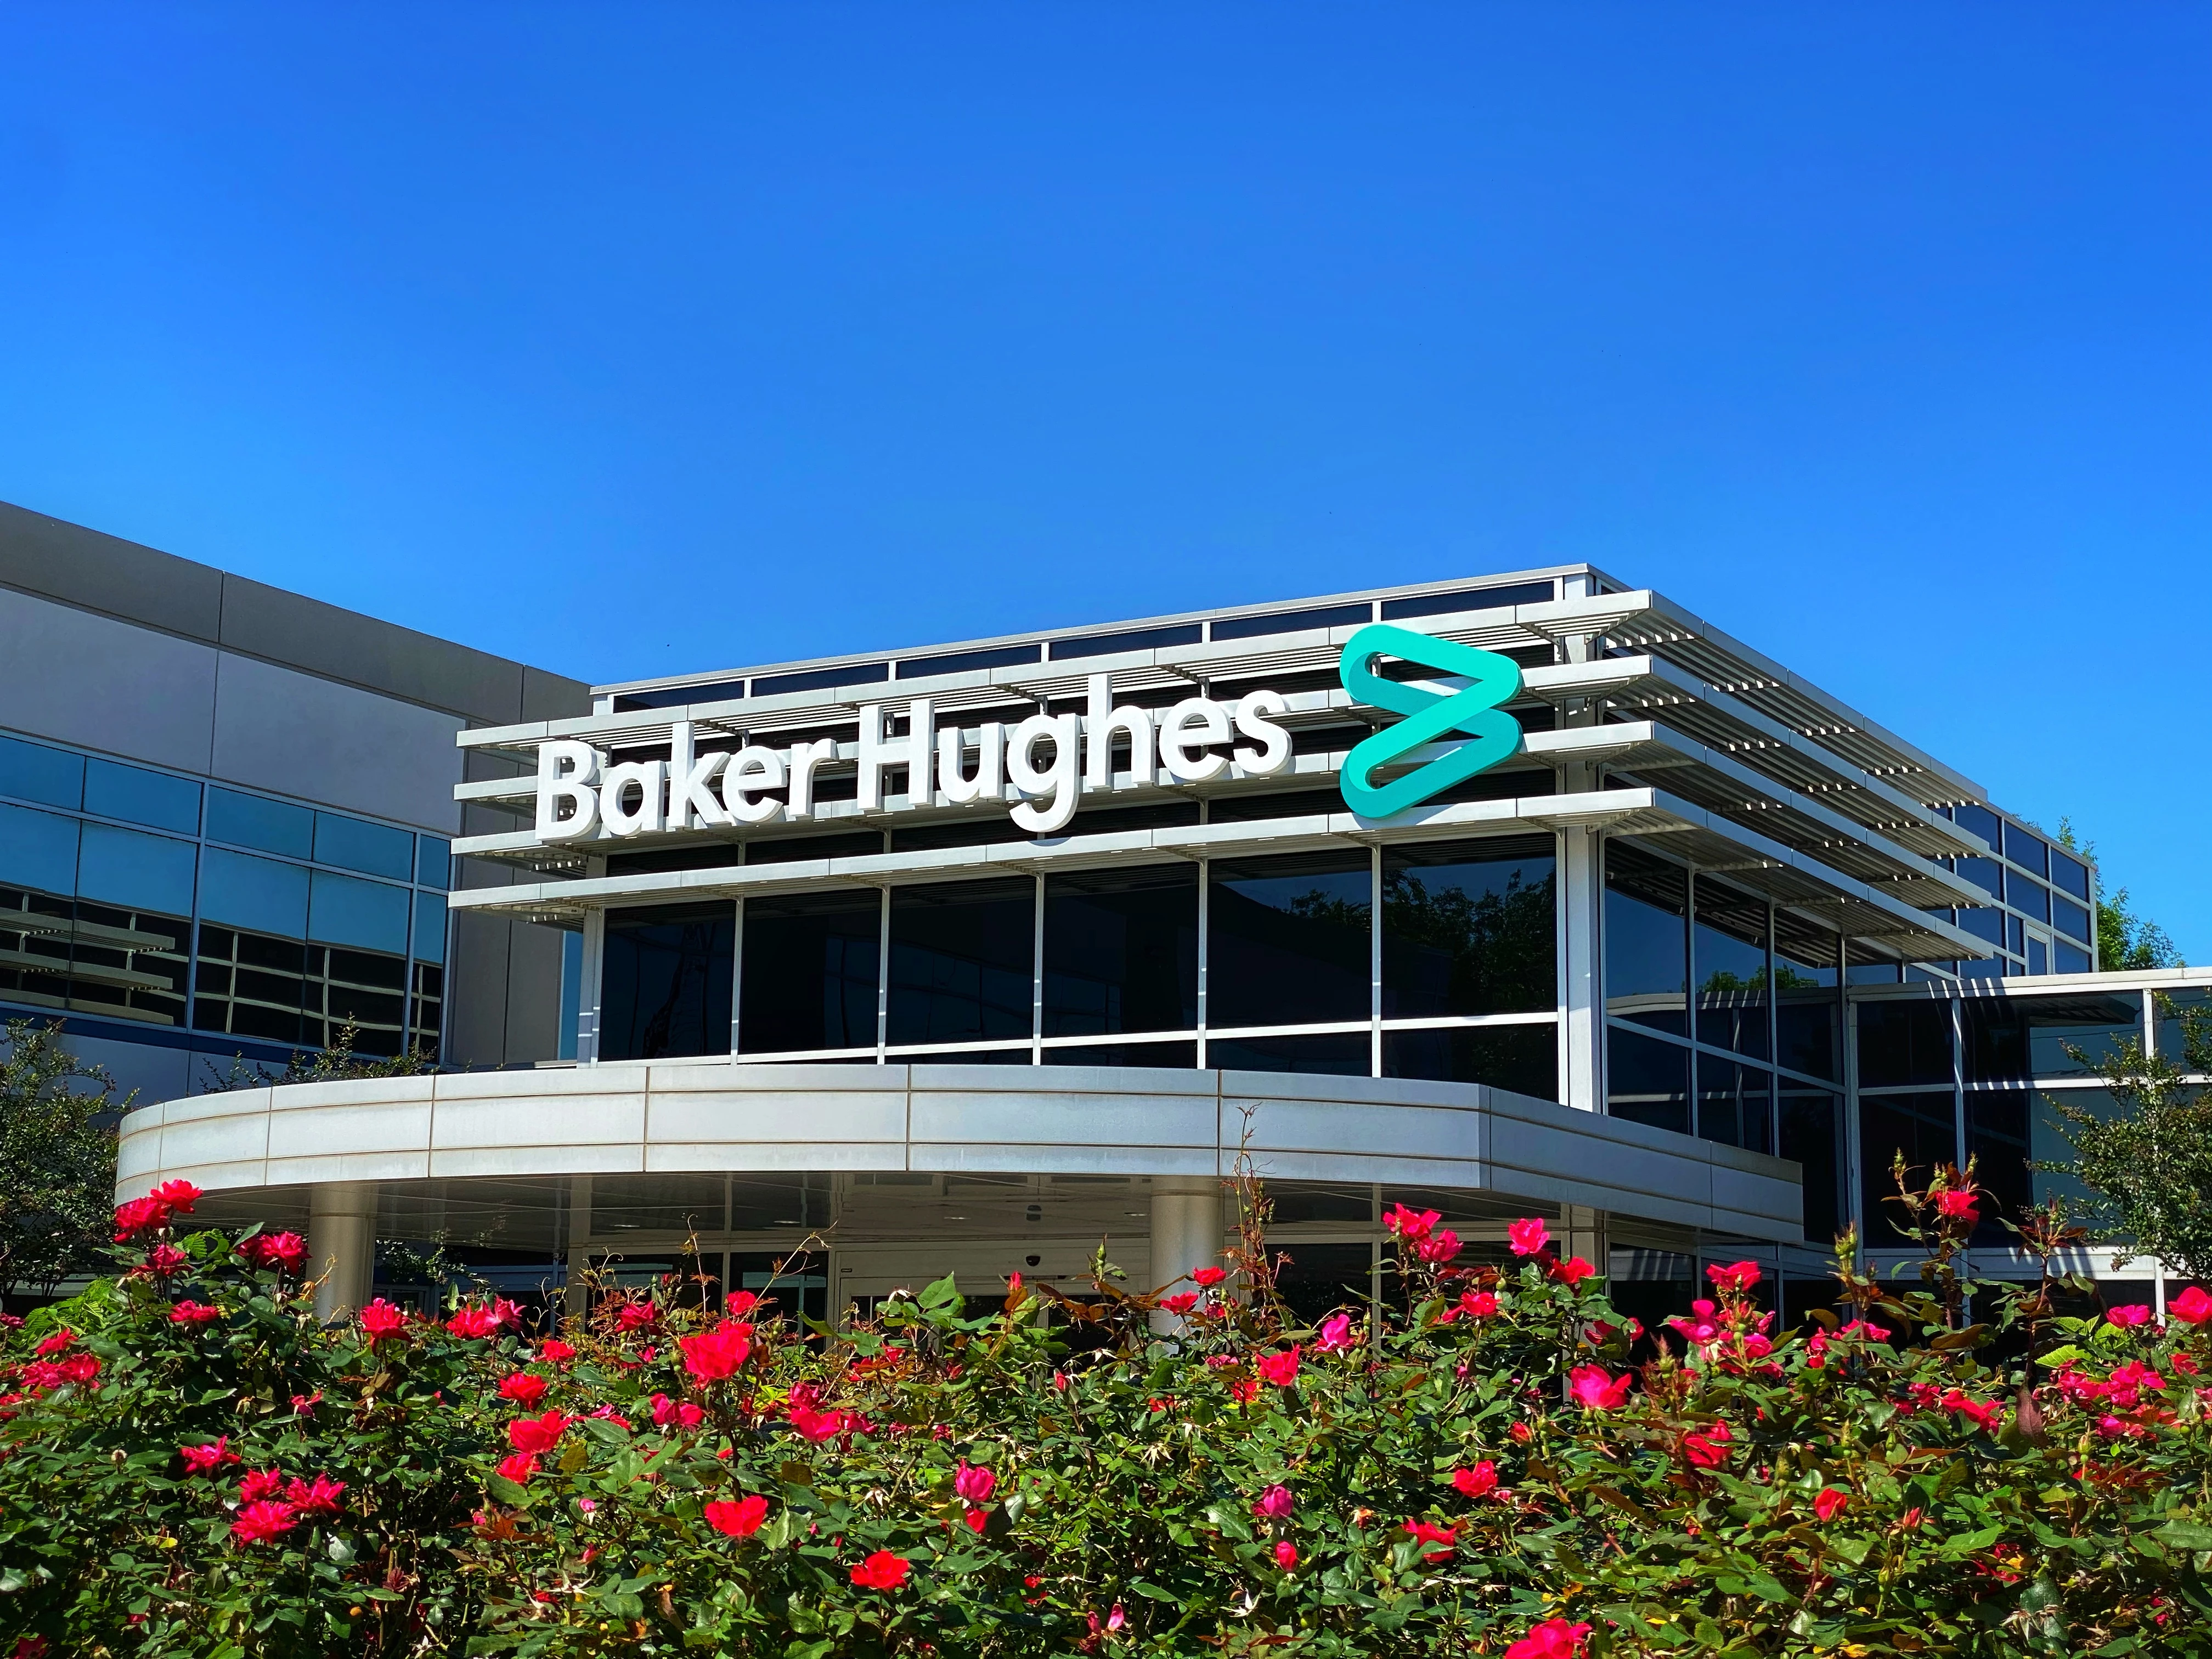 Baker Hughes Facility